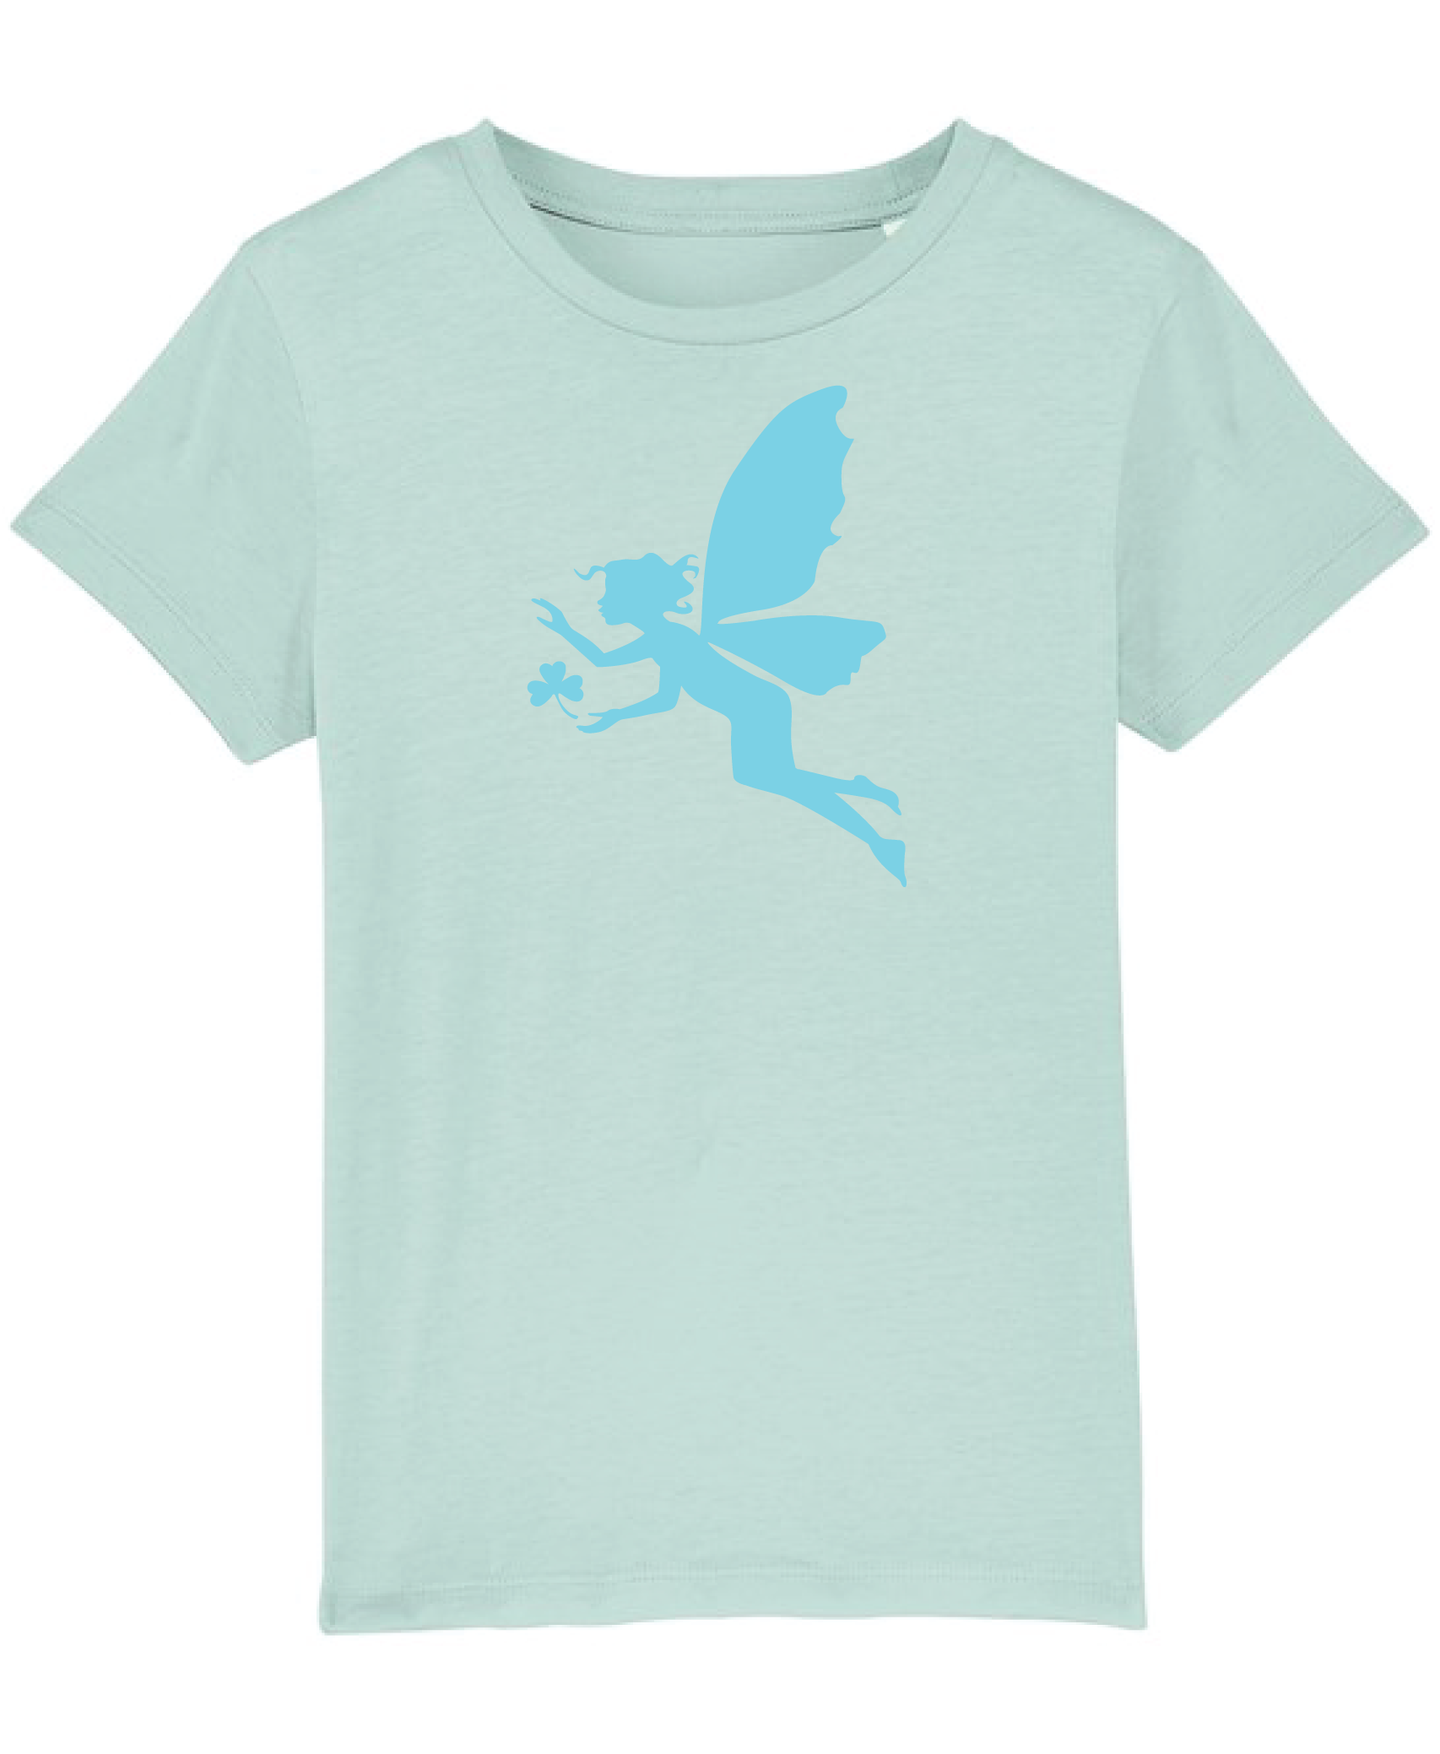 Girls New Organic Caribbean tee shirt with Fairy flock print.